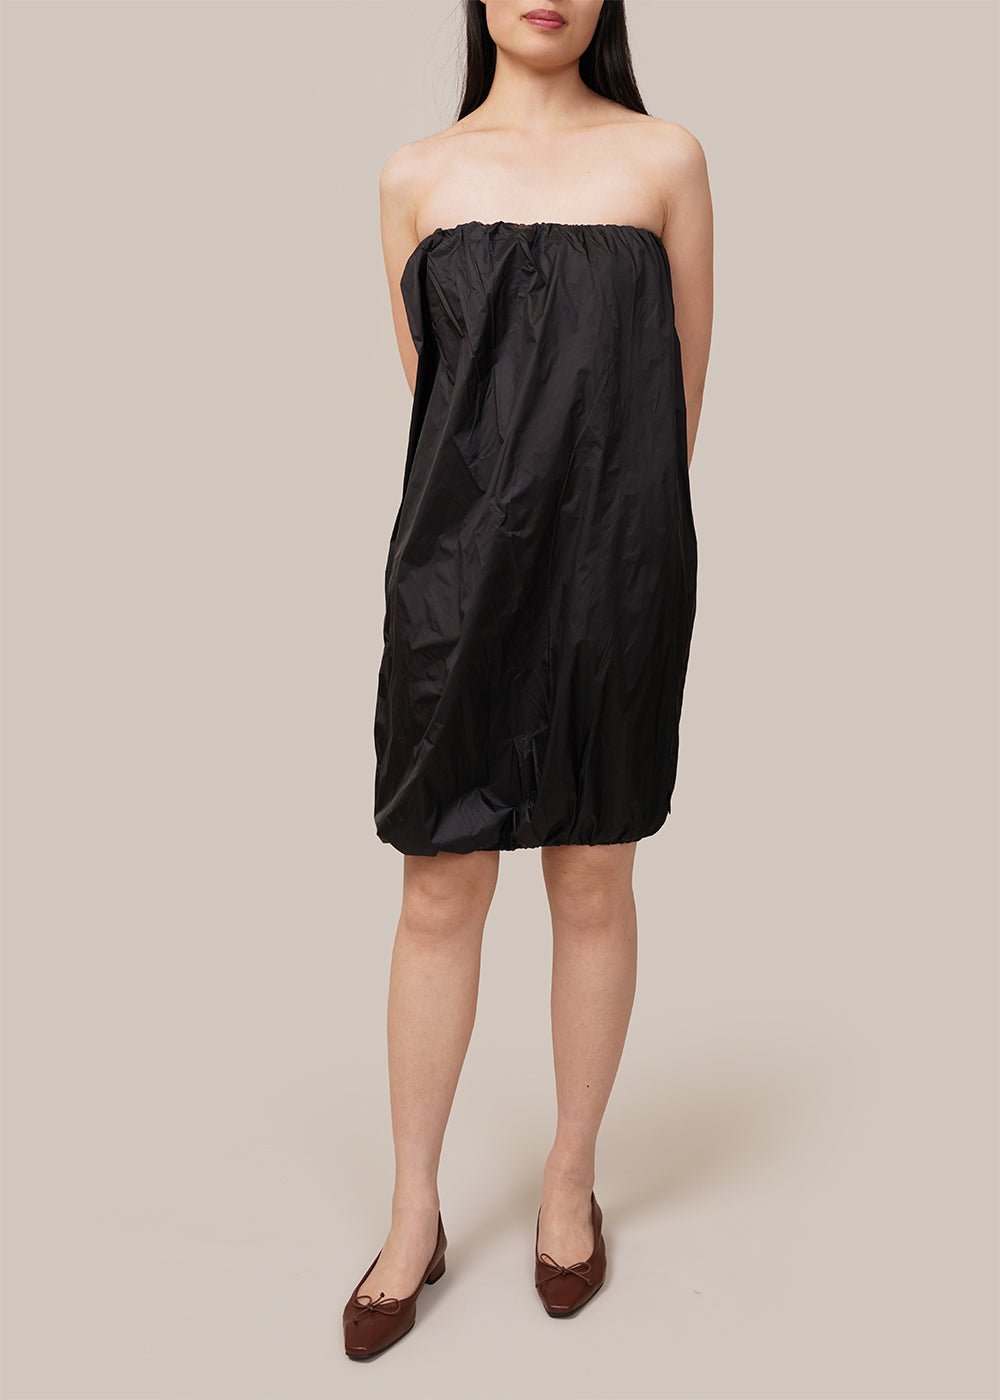 AMOMENTO Black Volume Shirring Mini Dress/Bolero - New Classics Studios Sustainable Ethical Fashion Canada